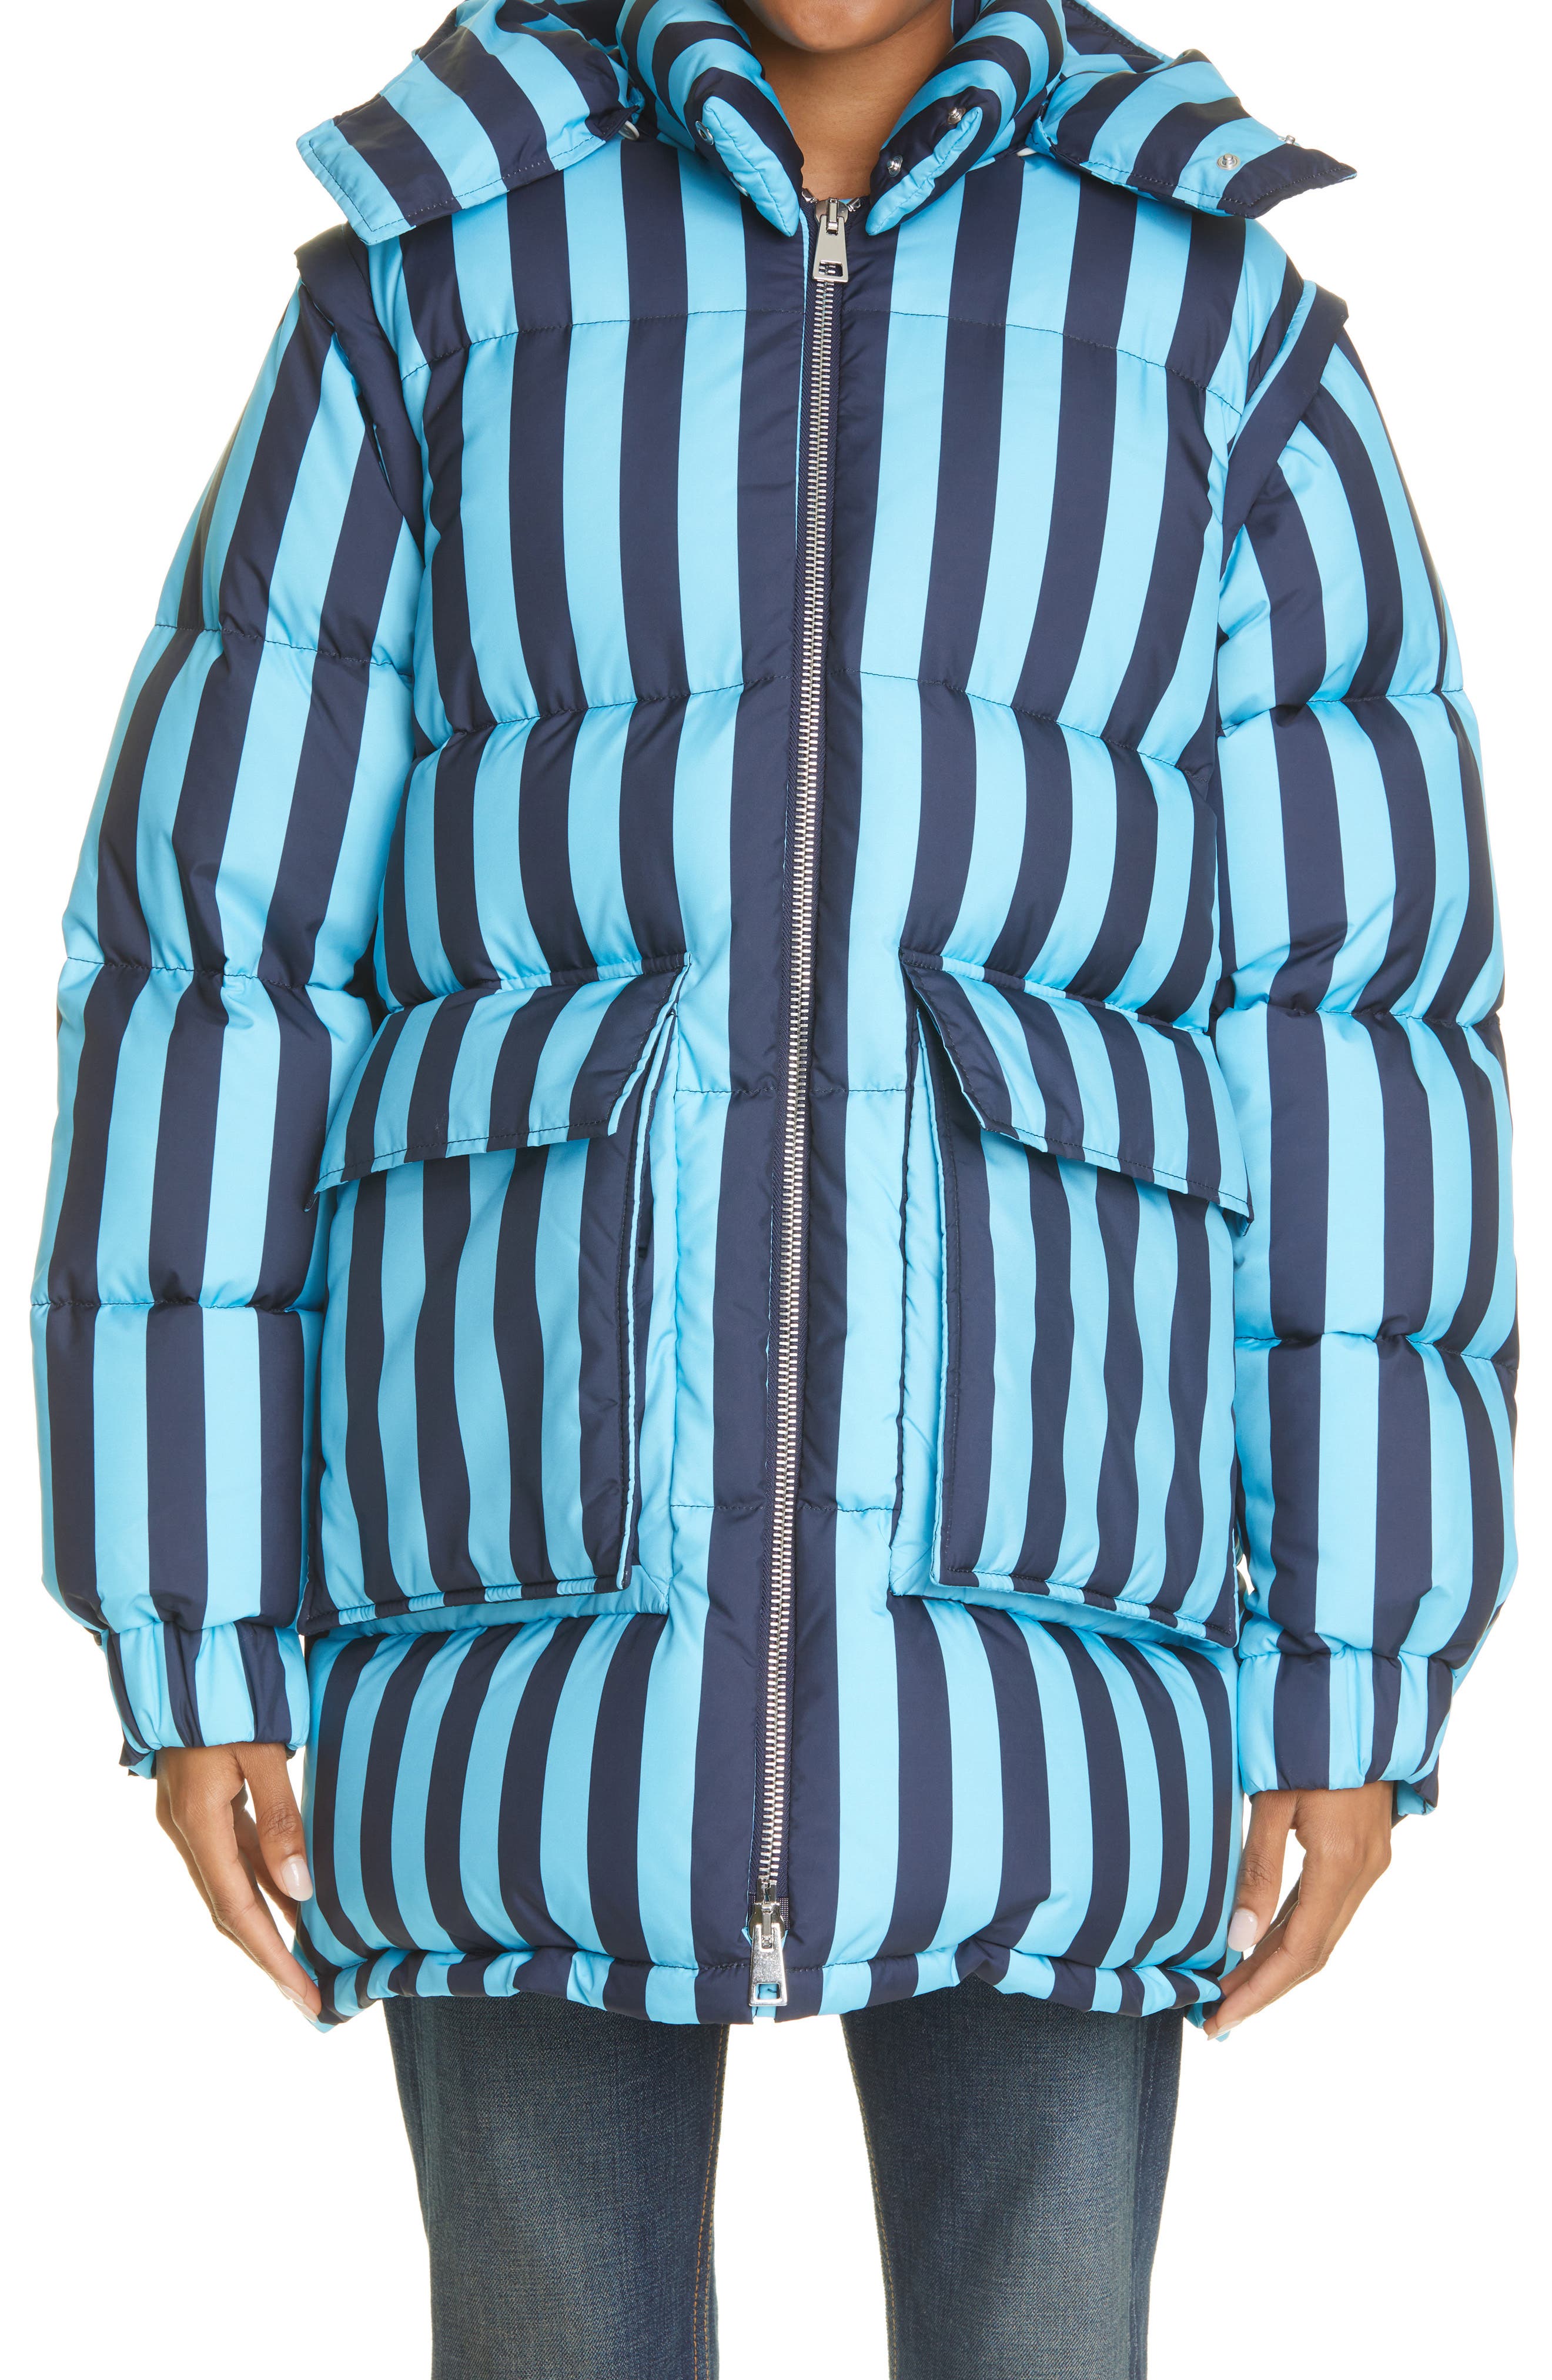 Sunnei Stripe Oversize Hooded Puffer Jacket in Blue And Azure Stripes